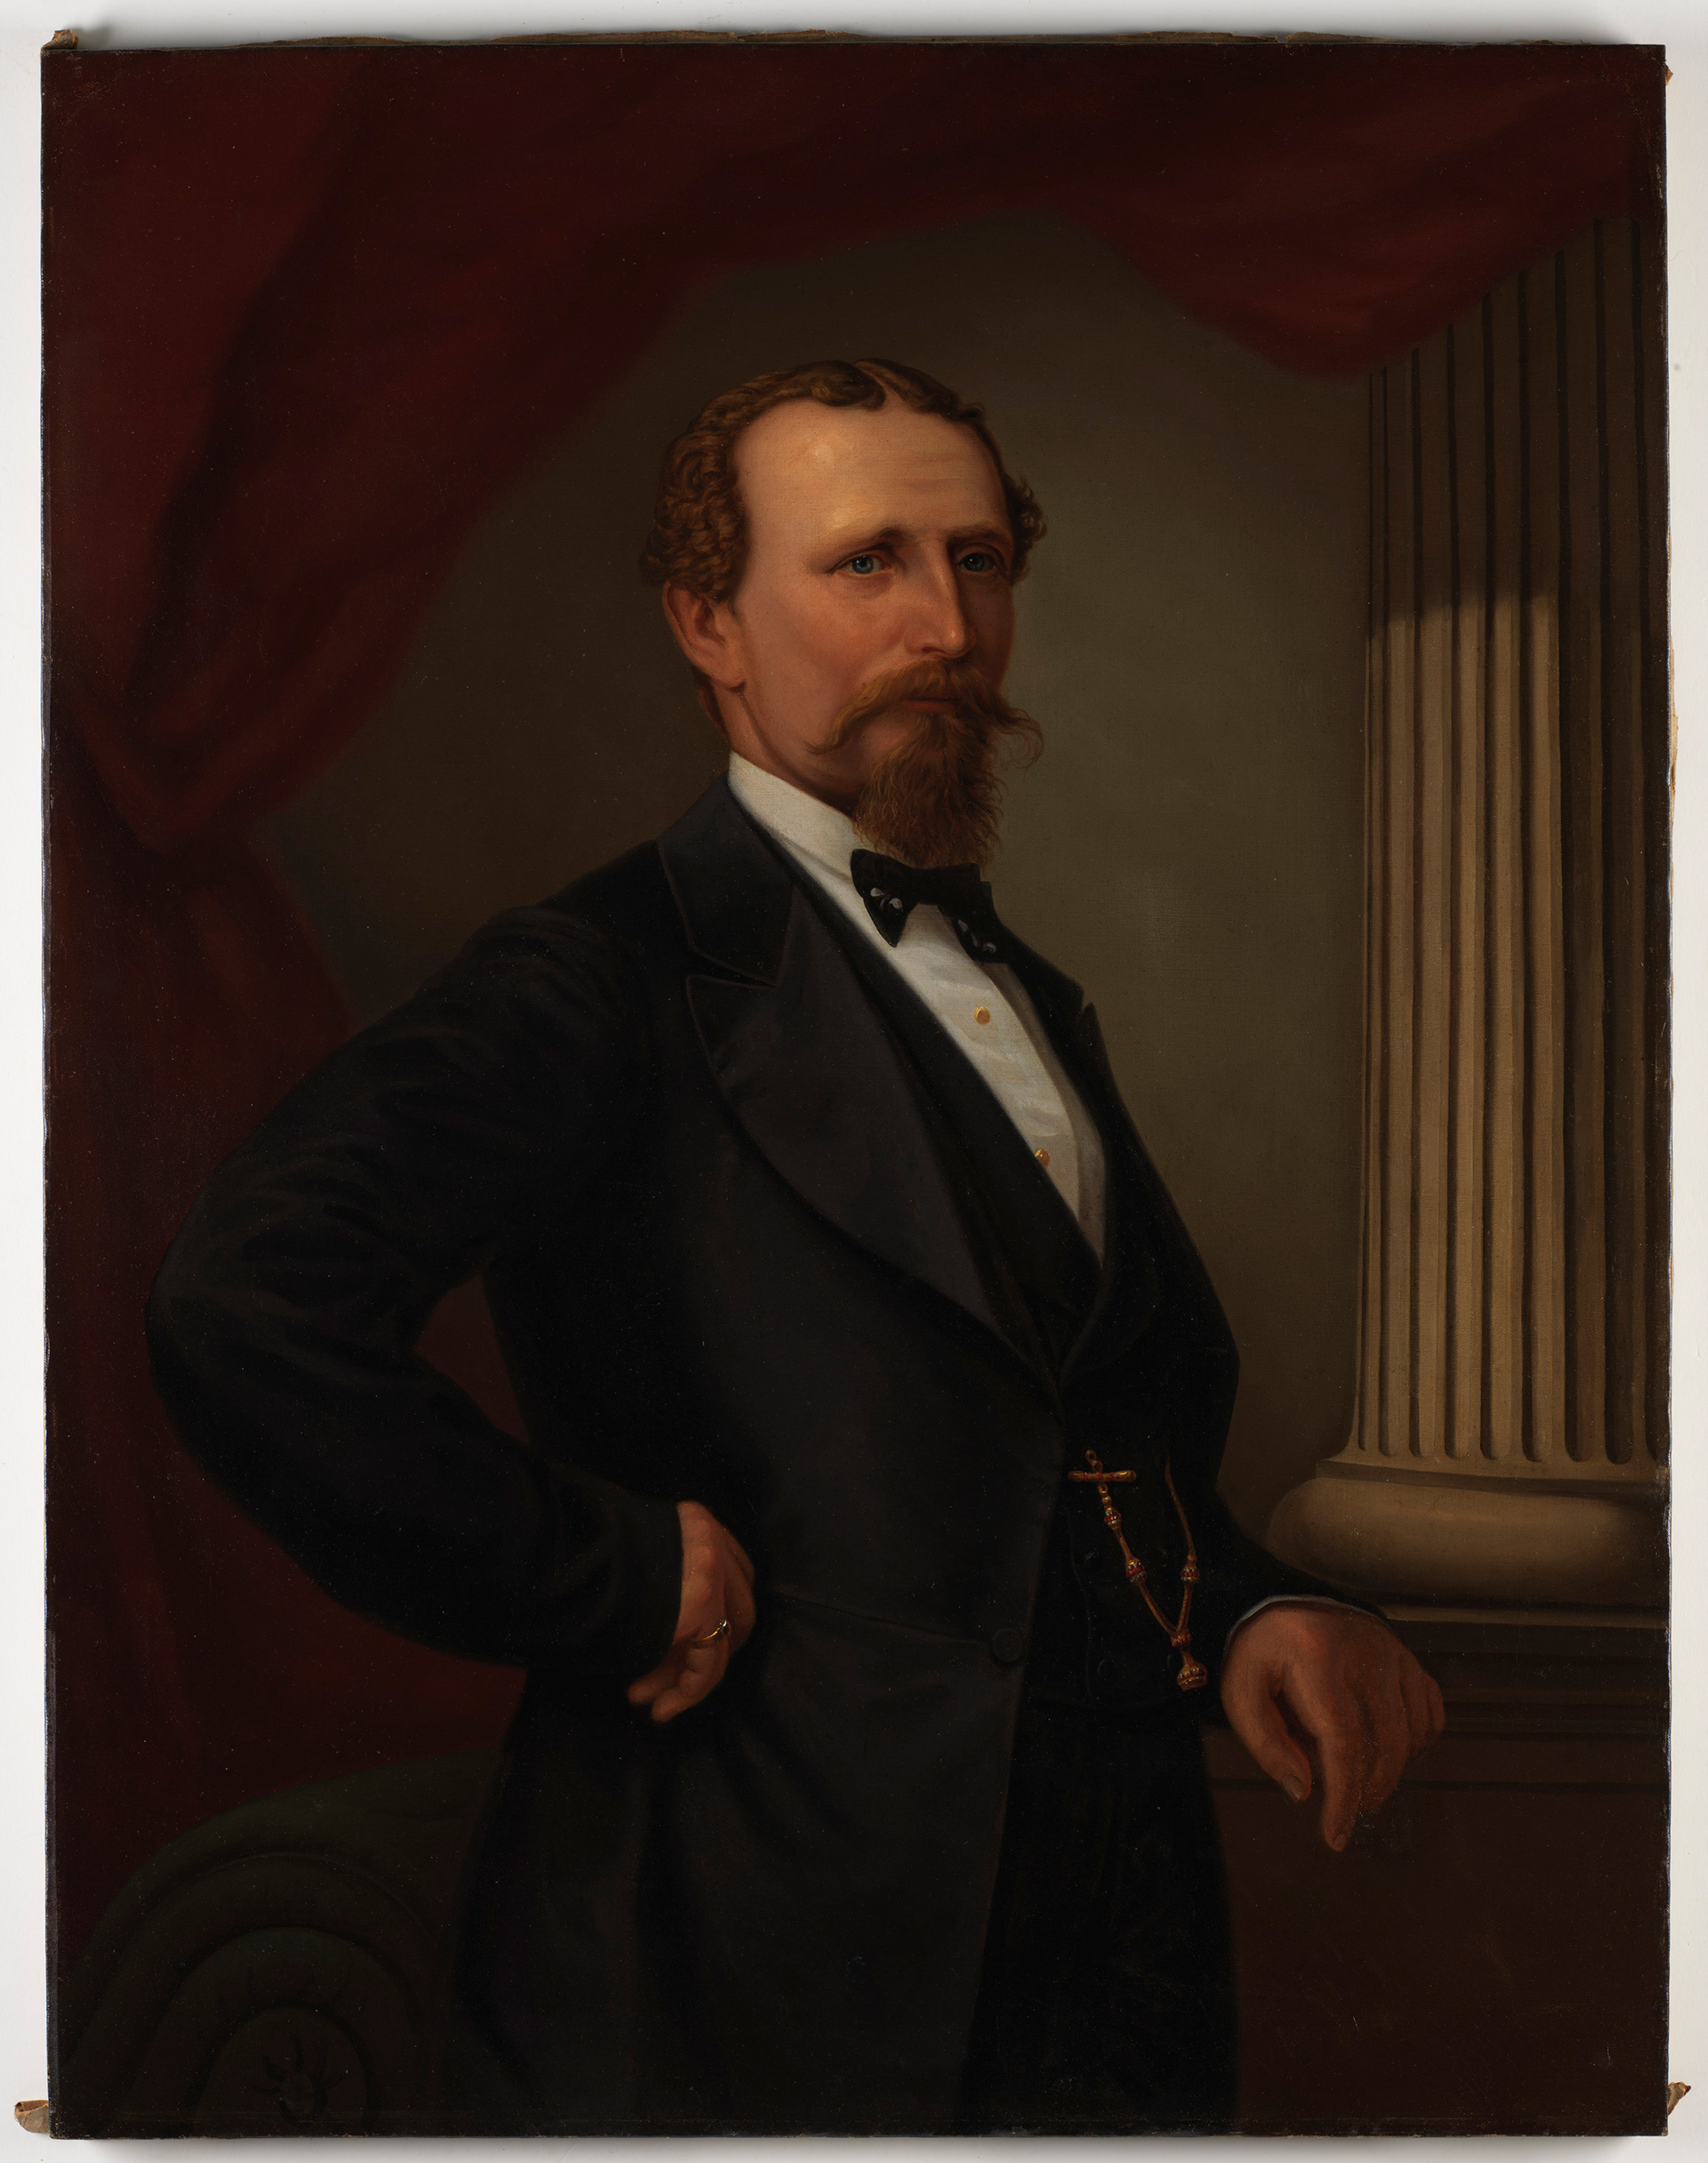 Portrait of Bernhard Otto Holtermann, ca. 1872-1885 / possibly by J. Kemp